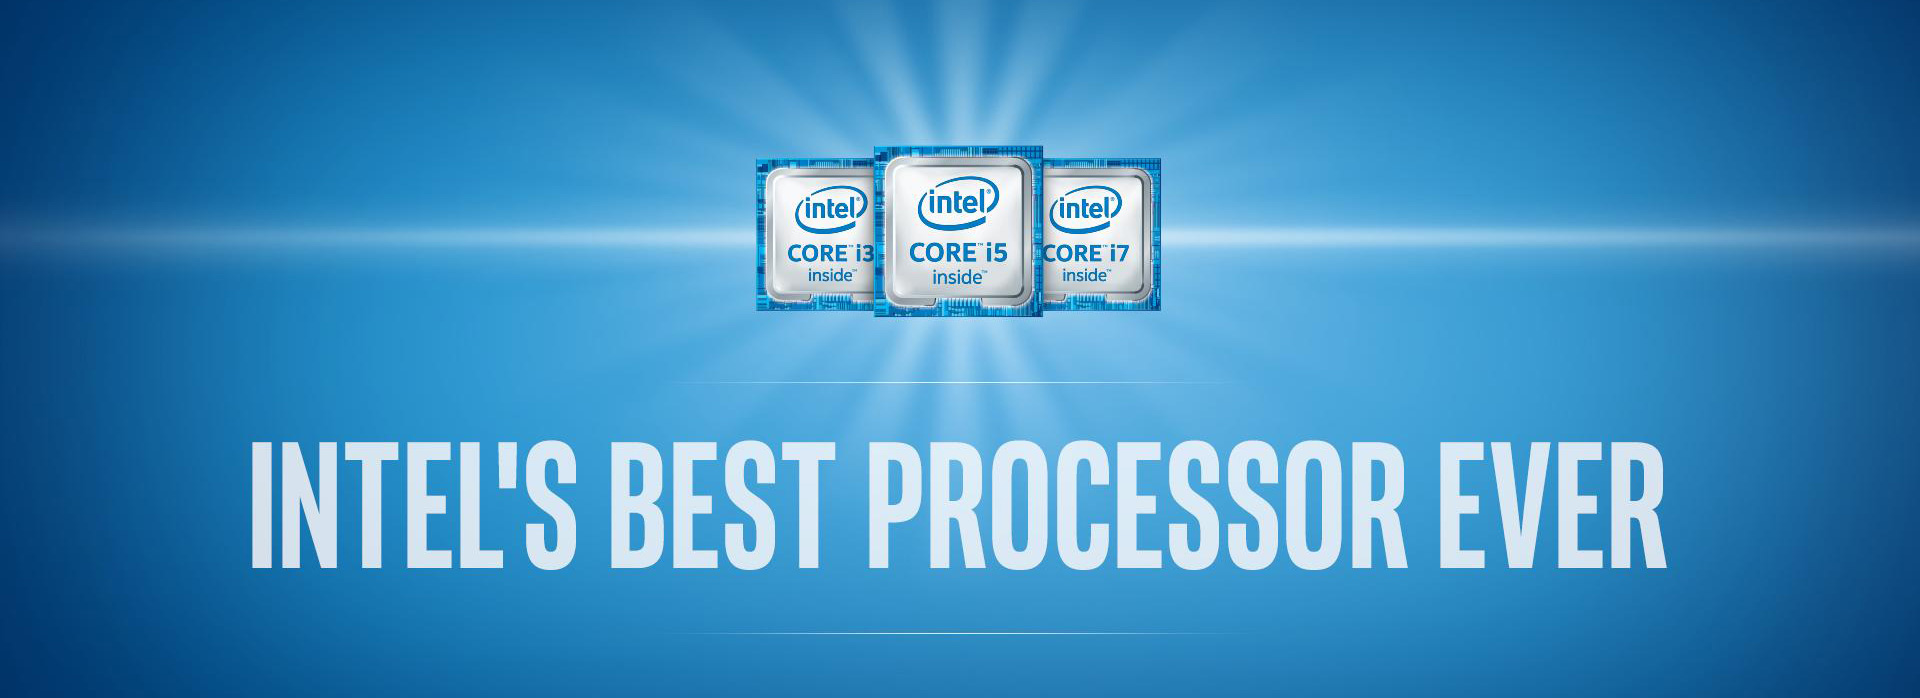 Intel's Best Processor Ever